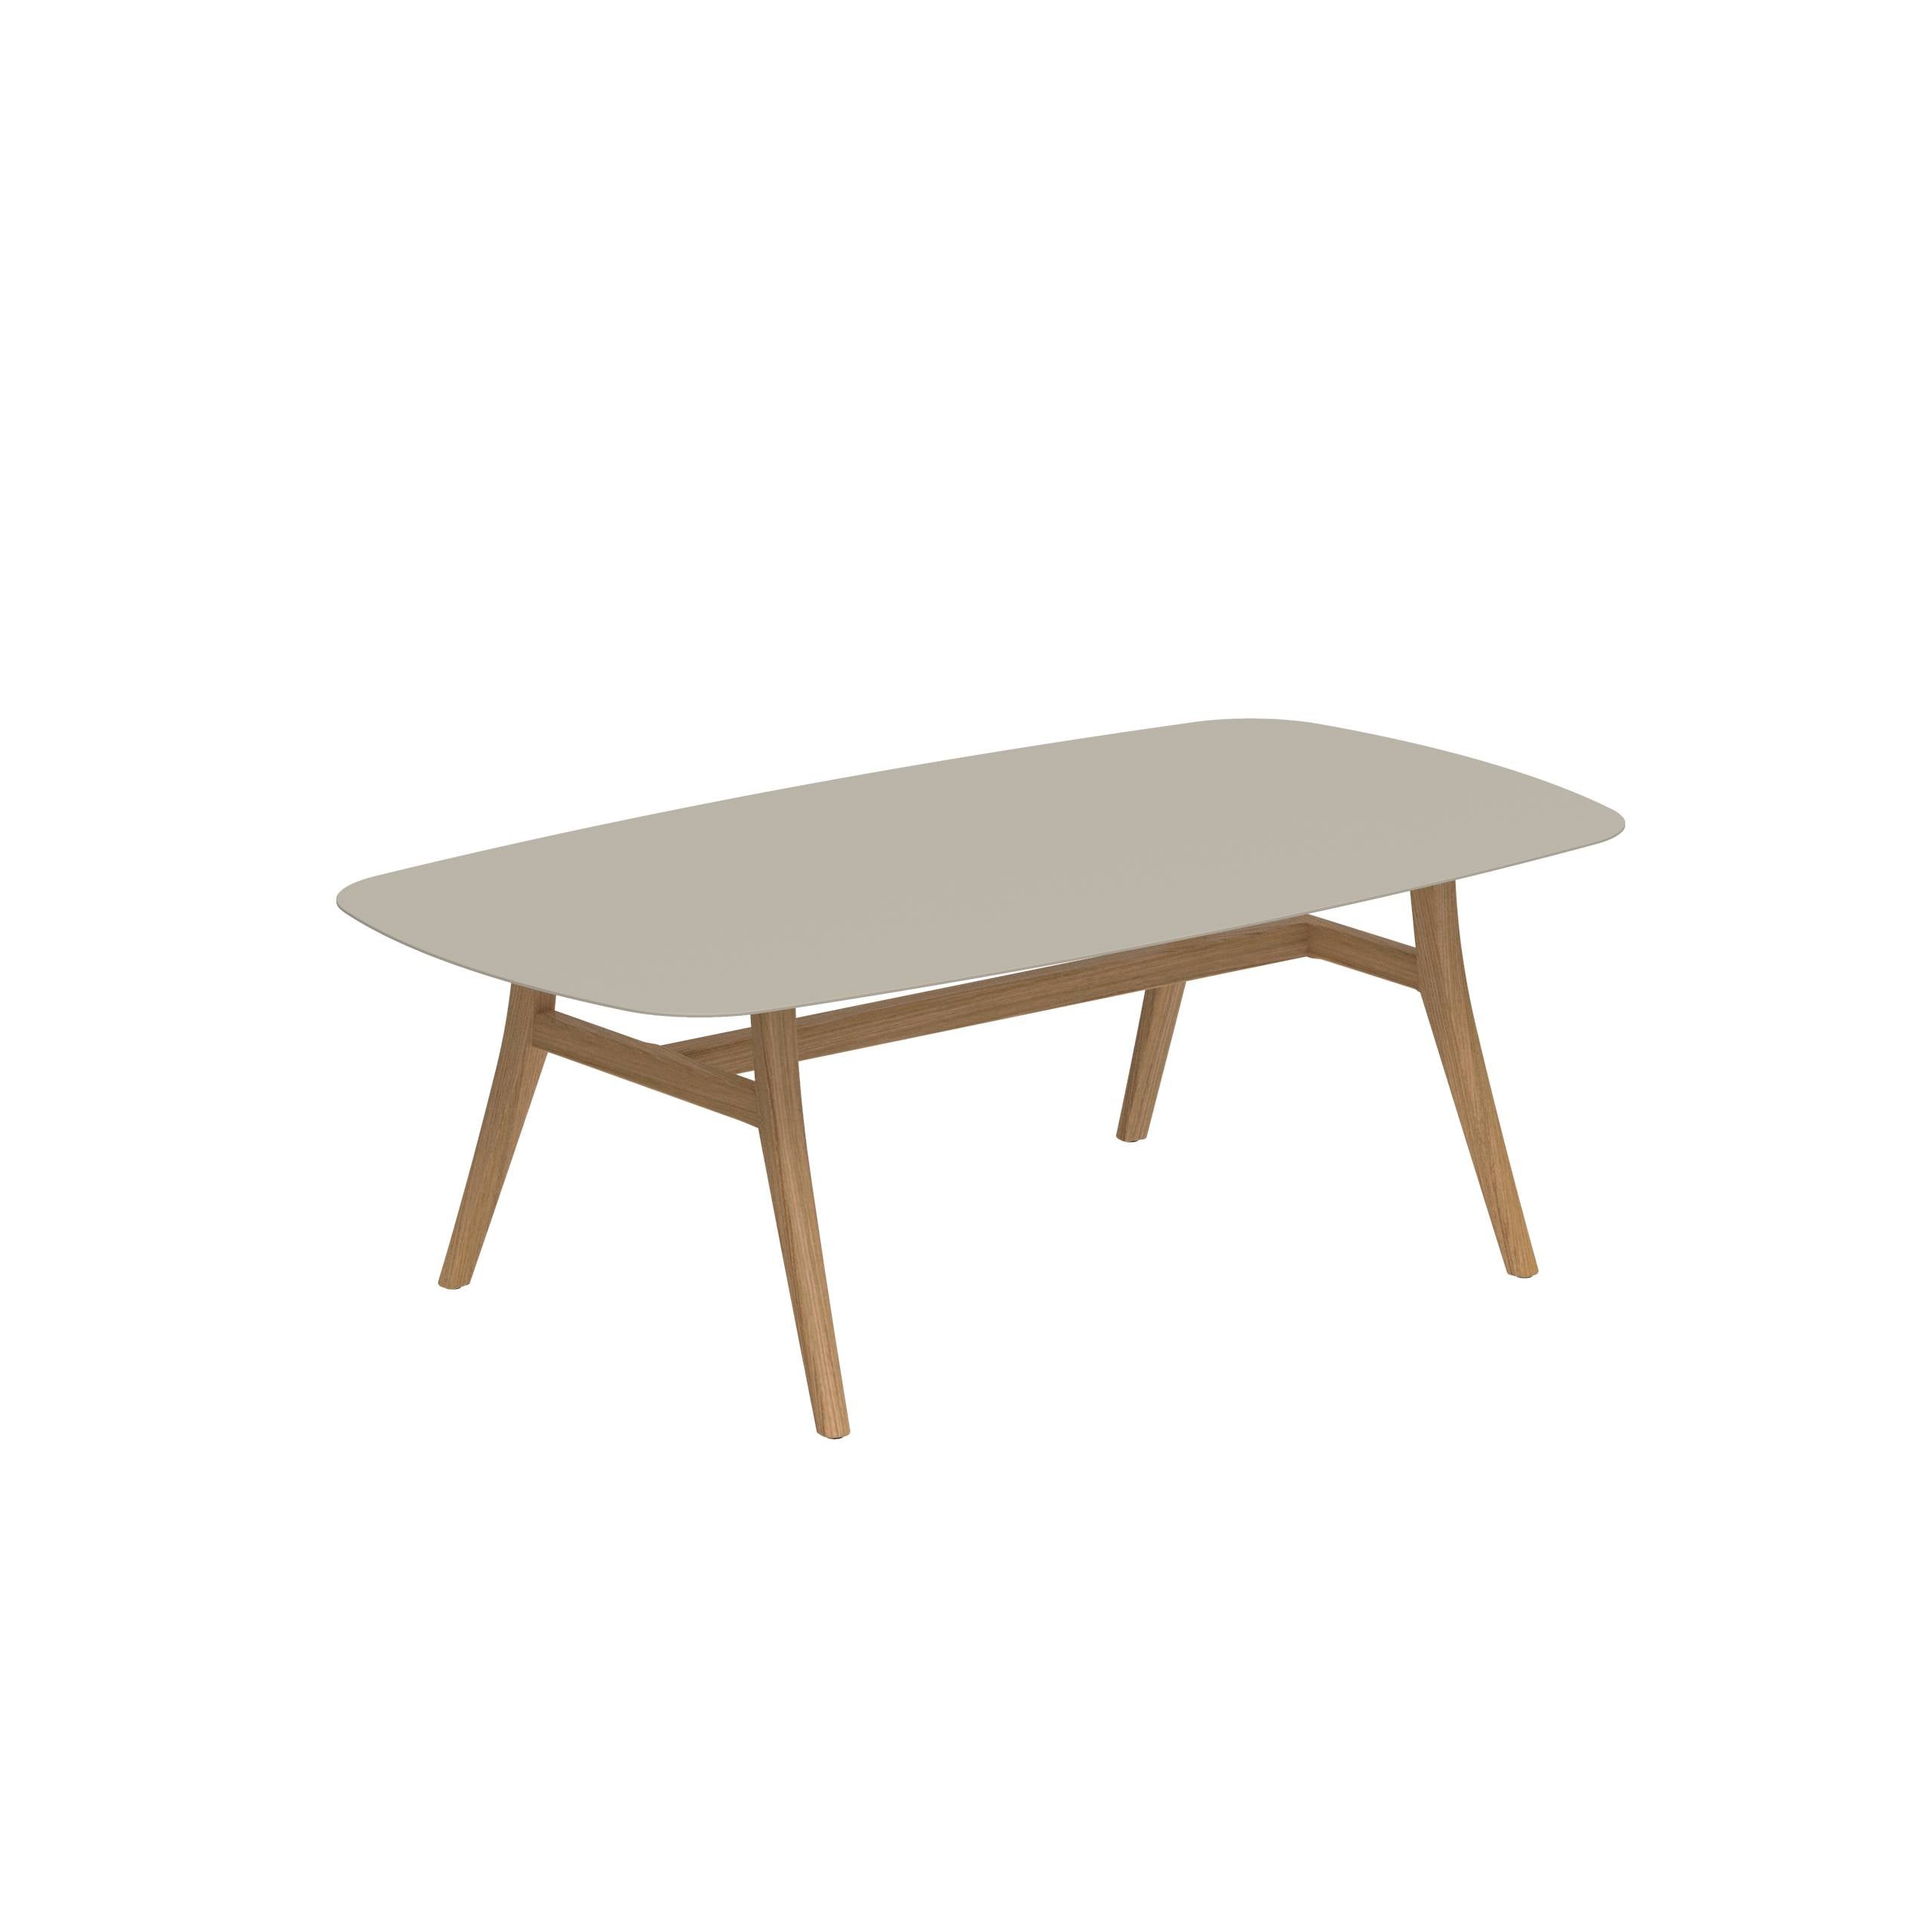 Zidiz Table 220x120cm Ceramic Pearl Grey